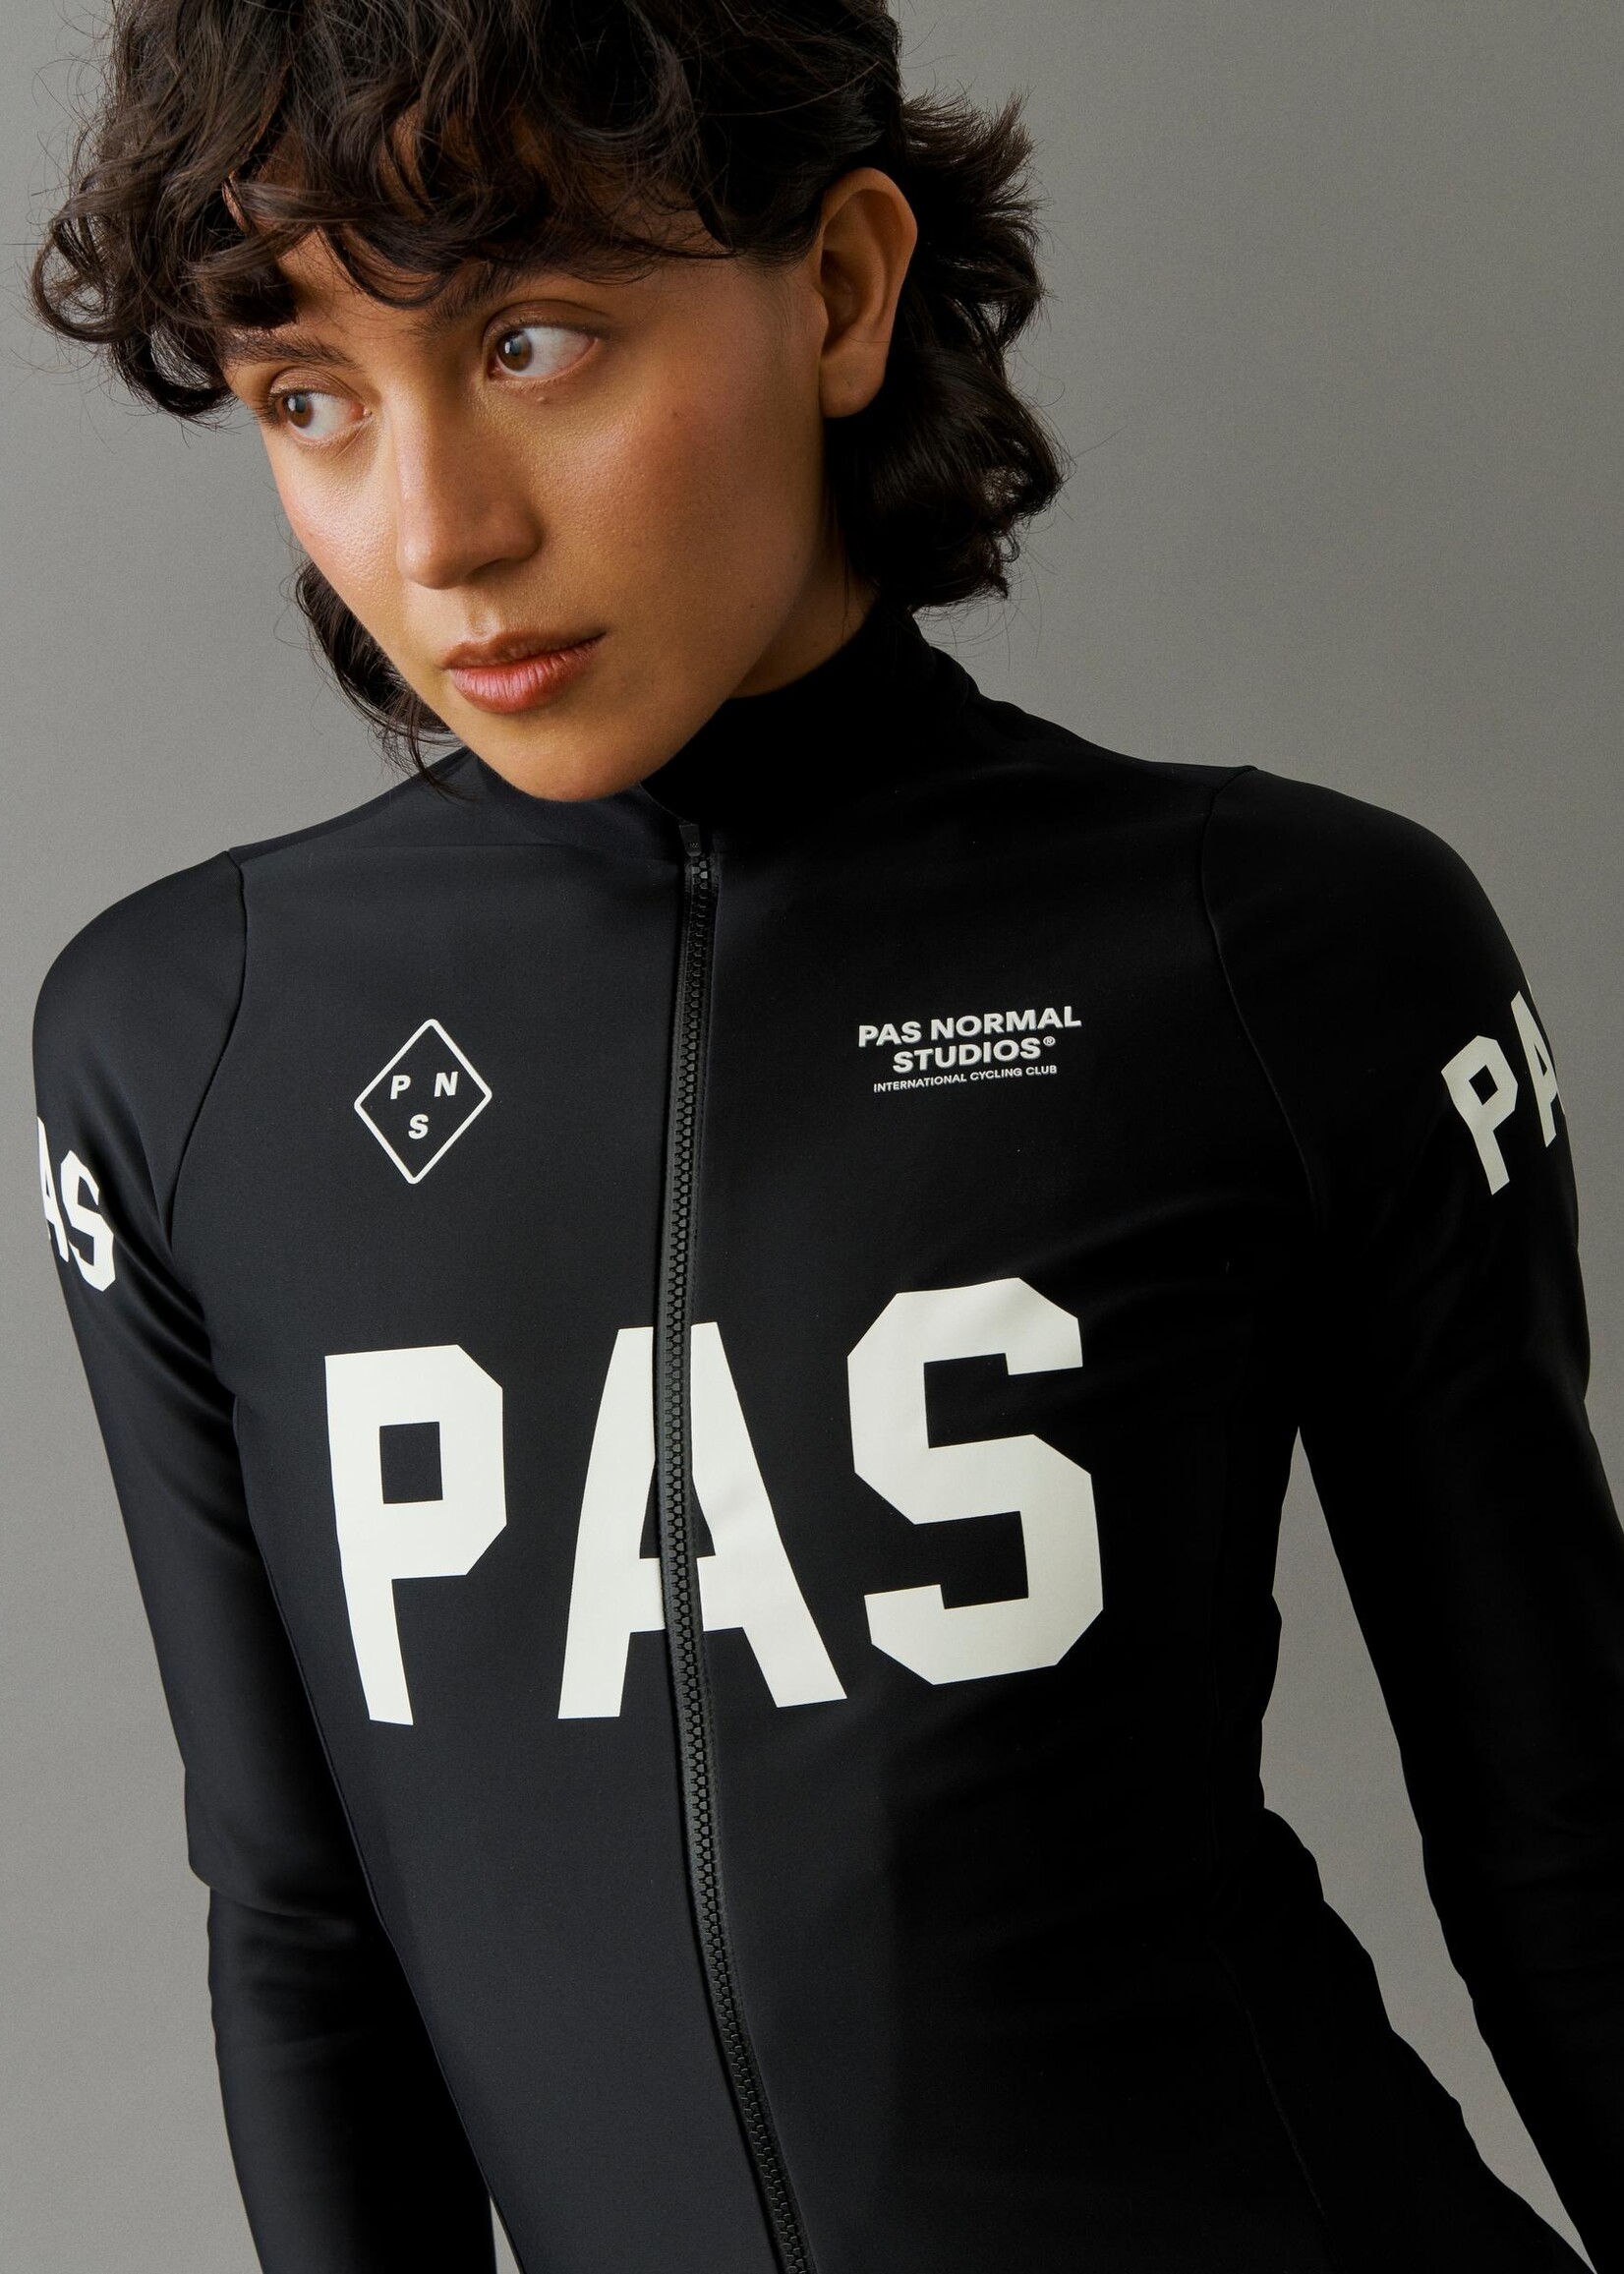 Pas Normal Studios Women's PAS Mechanism Thermal Long Sleeve Jersey - Black